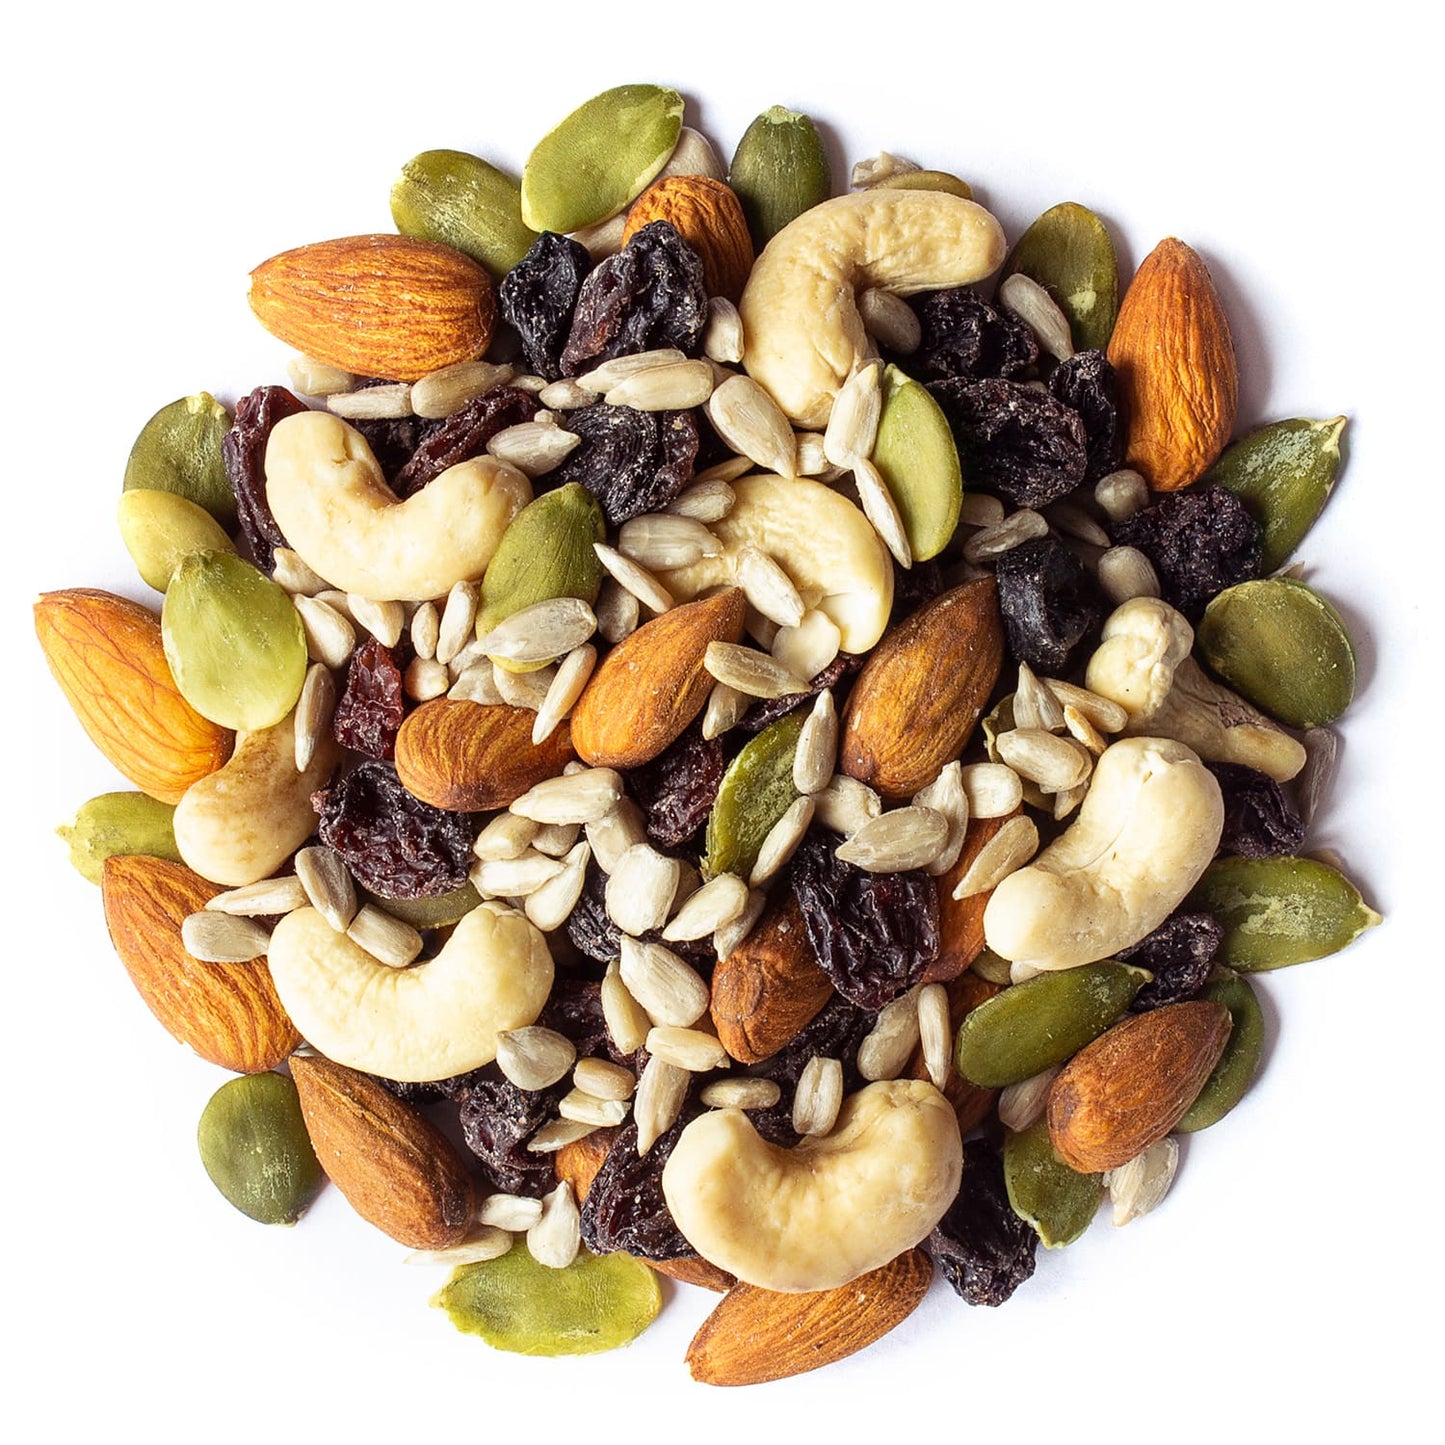 Organic Raw Seeds, Nuts and Raisins Mix - Non-GMO, Contains Walnuts, Almonds, Cashews, Hazelnuts, and Raisins. Vegan, Kosher,No Added Sugar